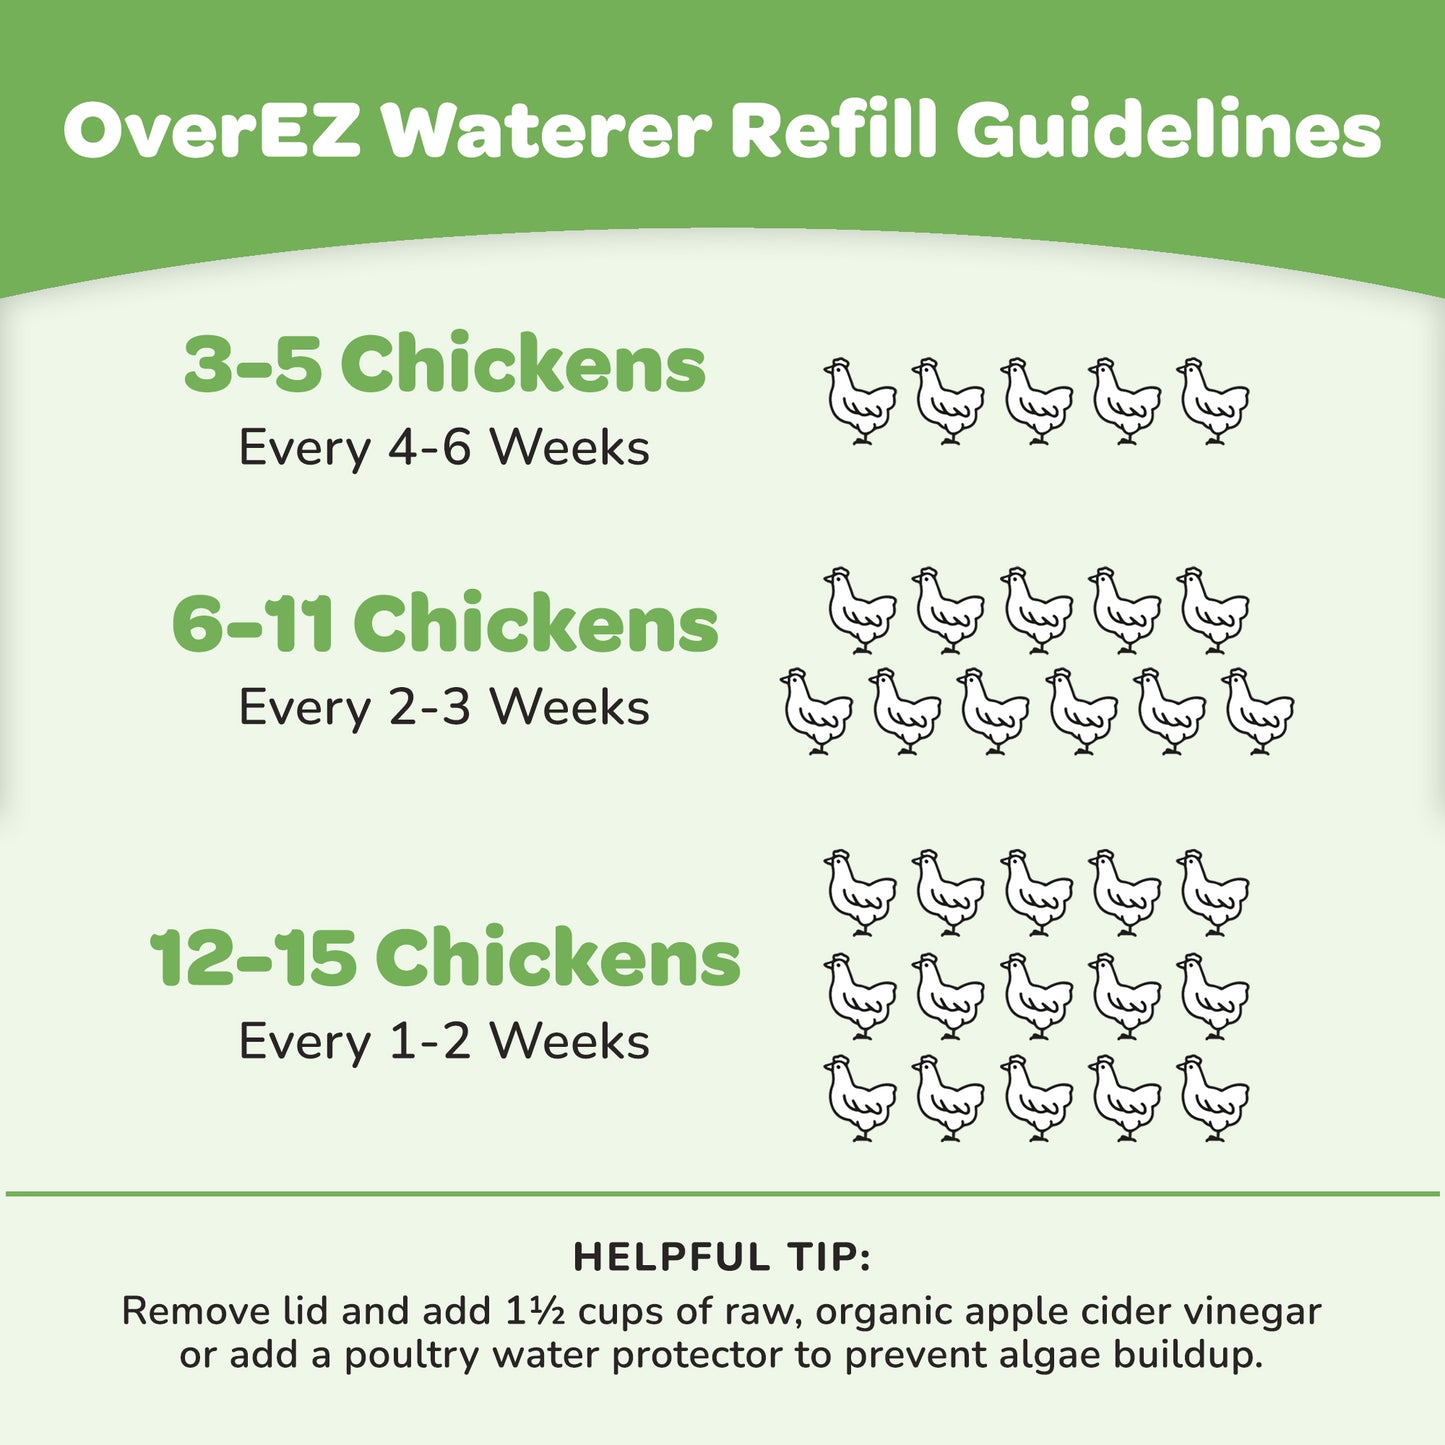 OverEZ waterer refill guidelines